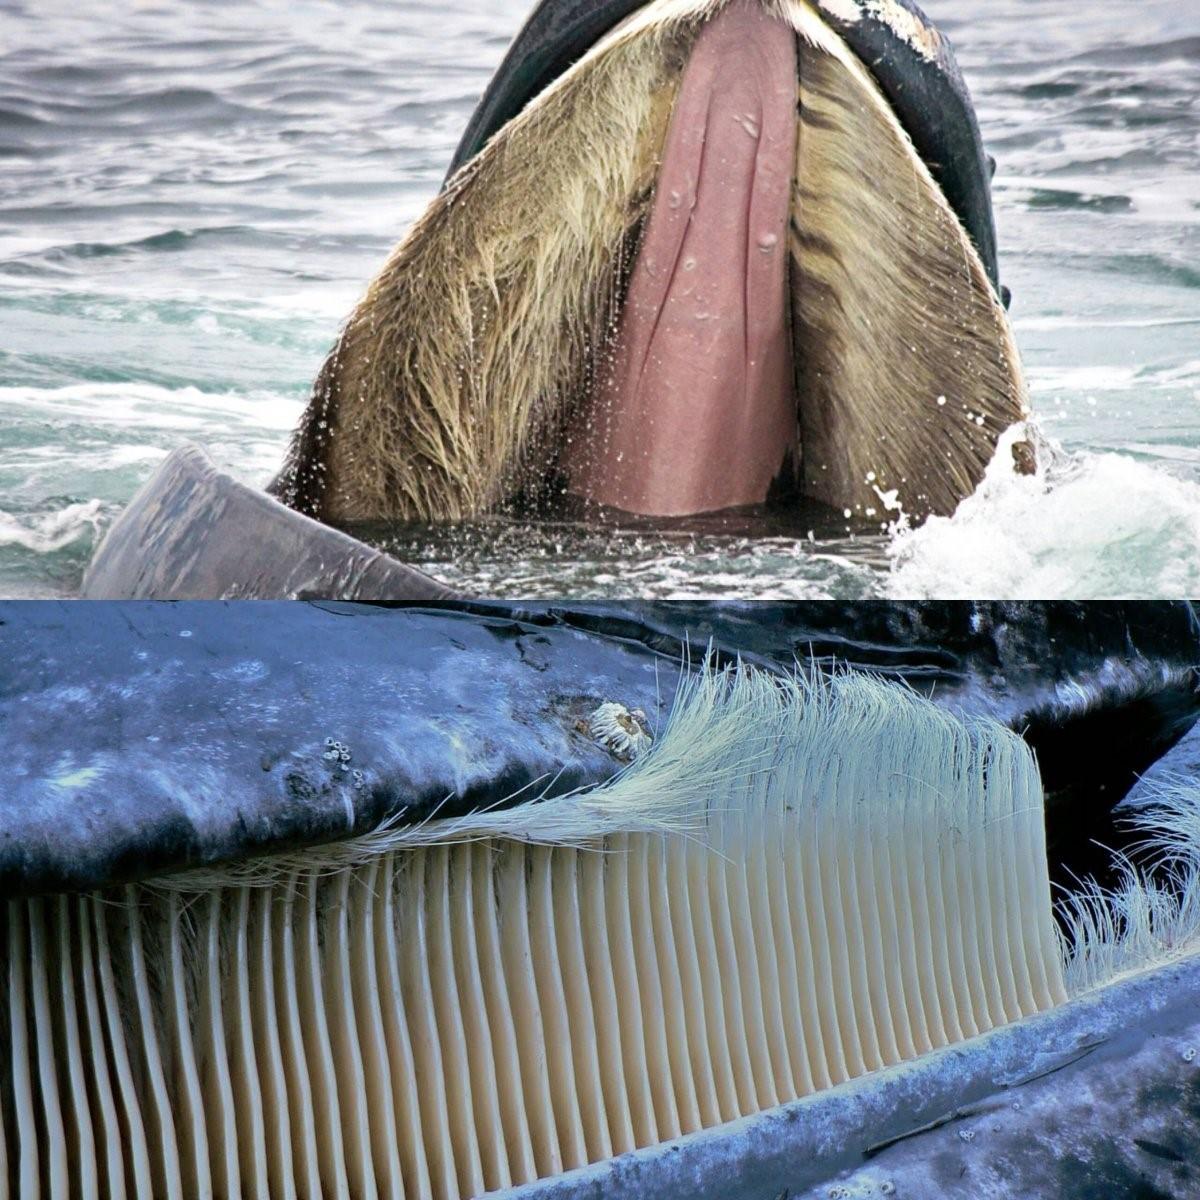 сколько в длину член кита фото 72